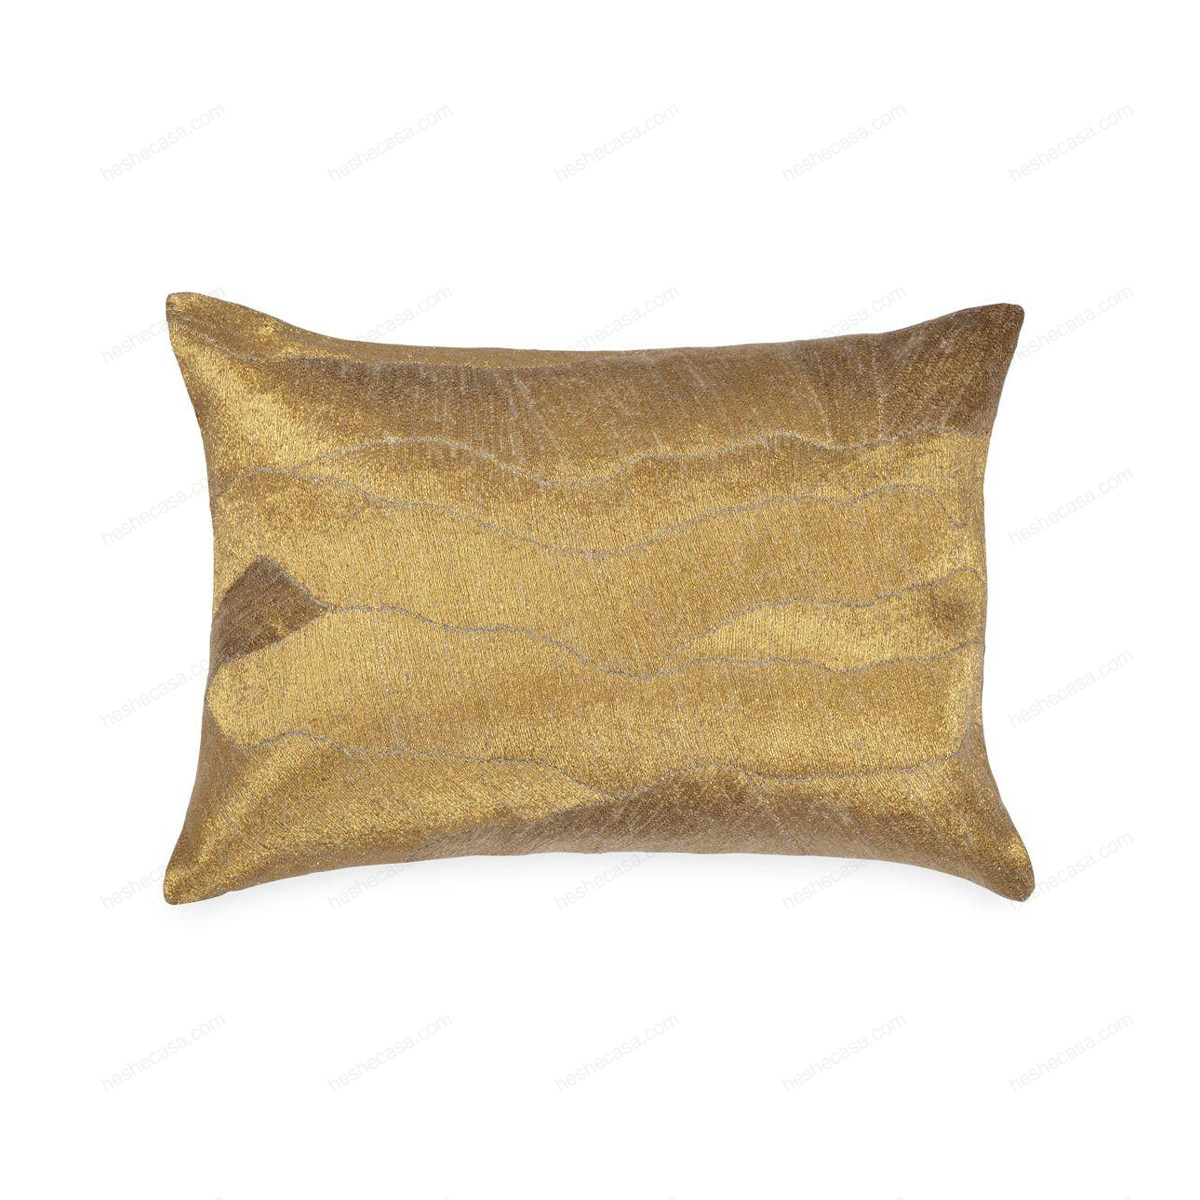 After The Storm Gold Decorative Pillow靠垫